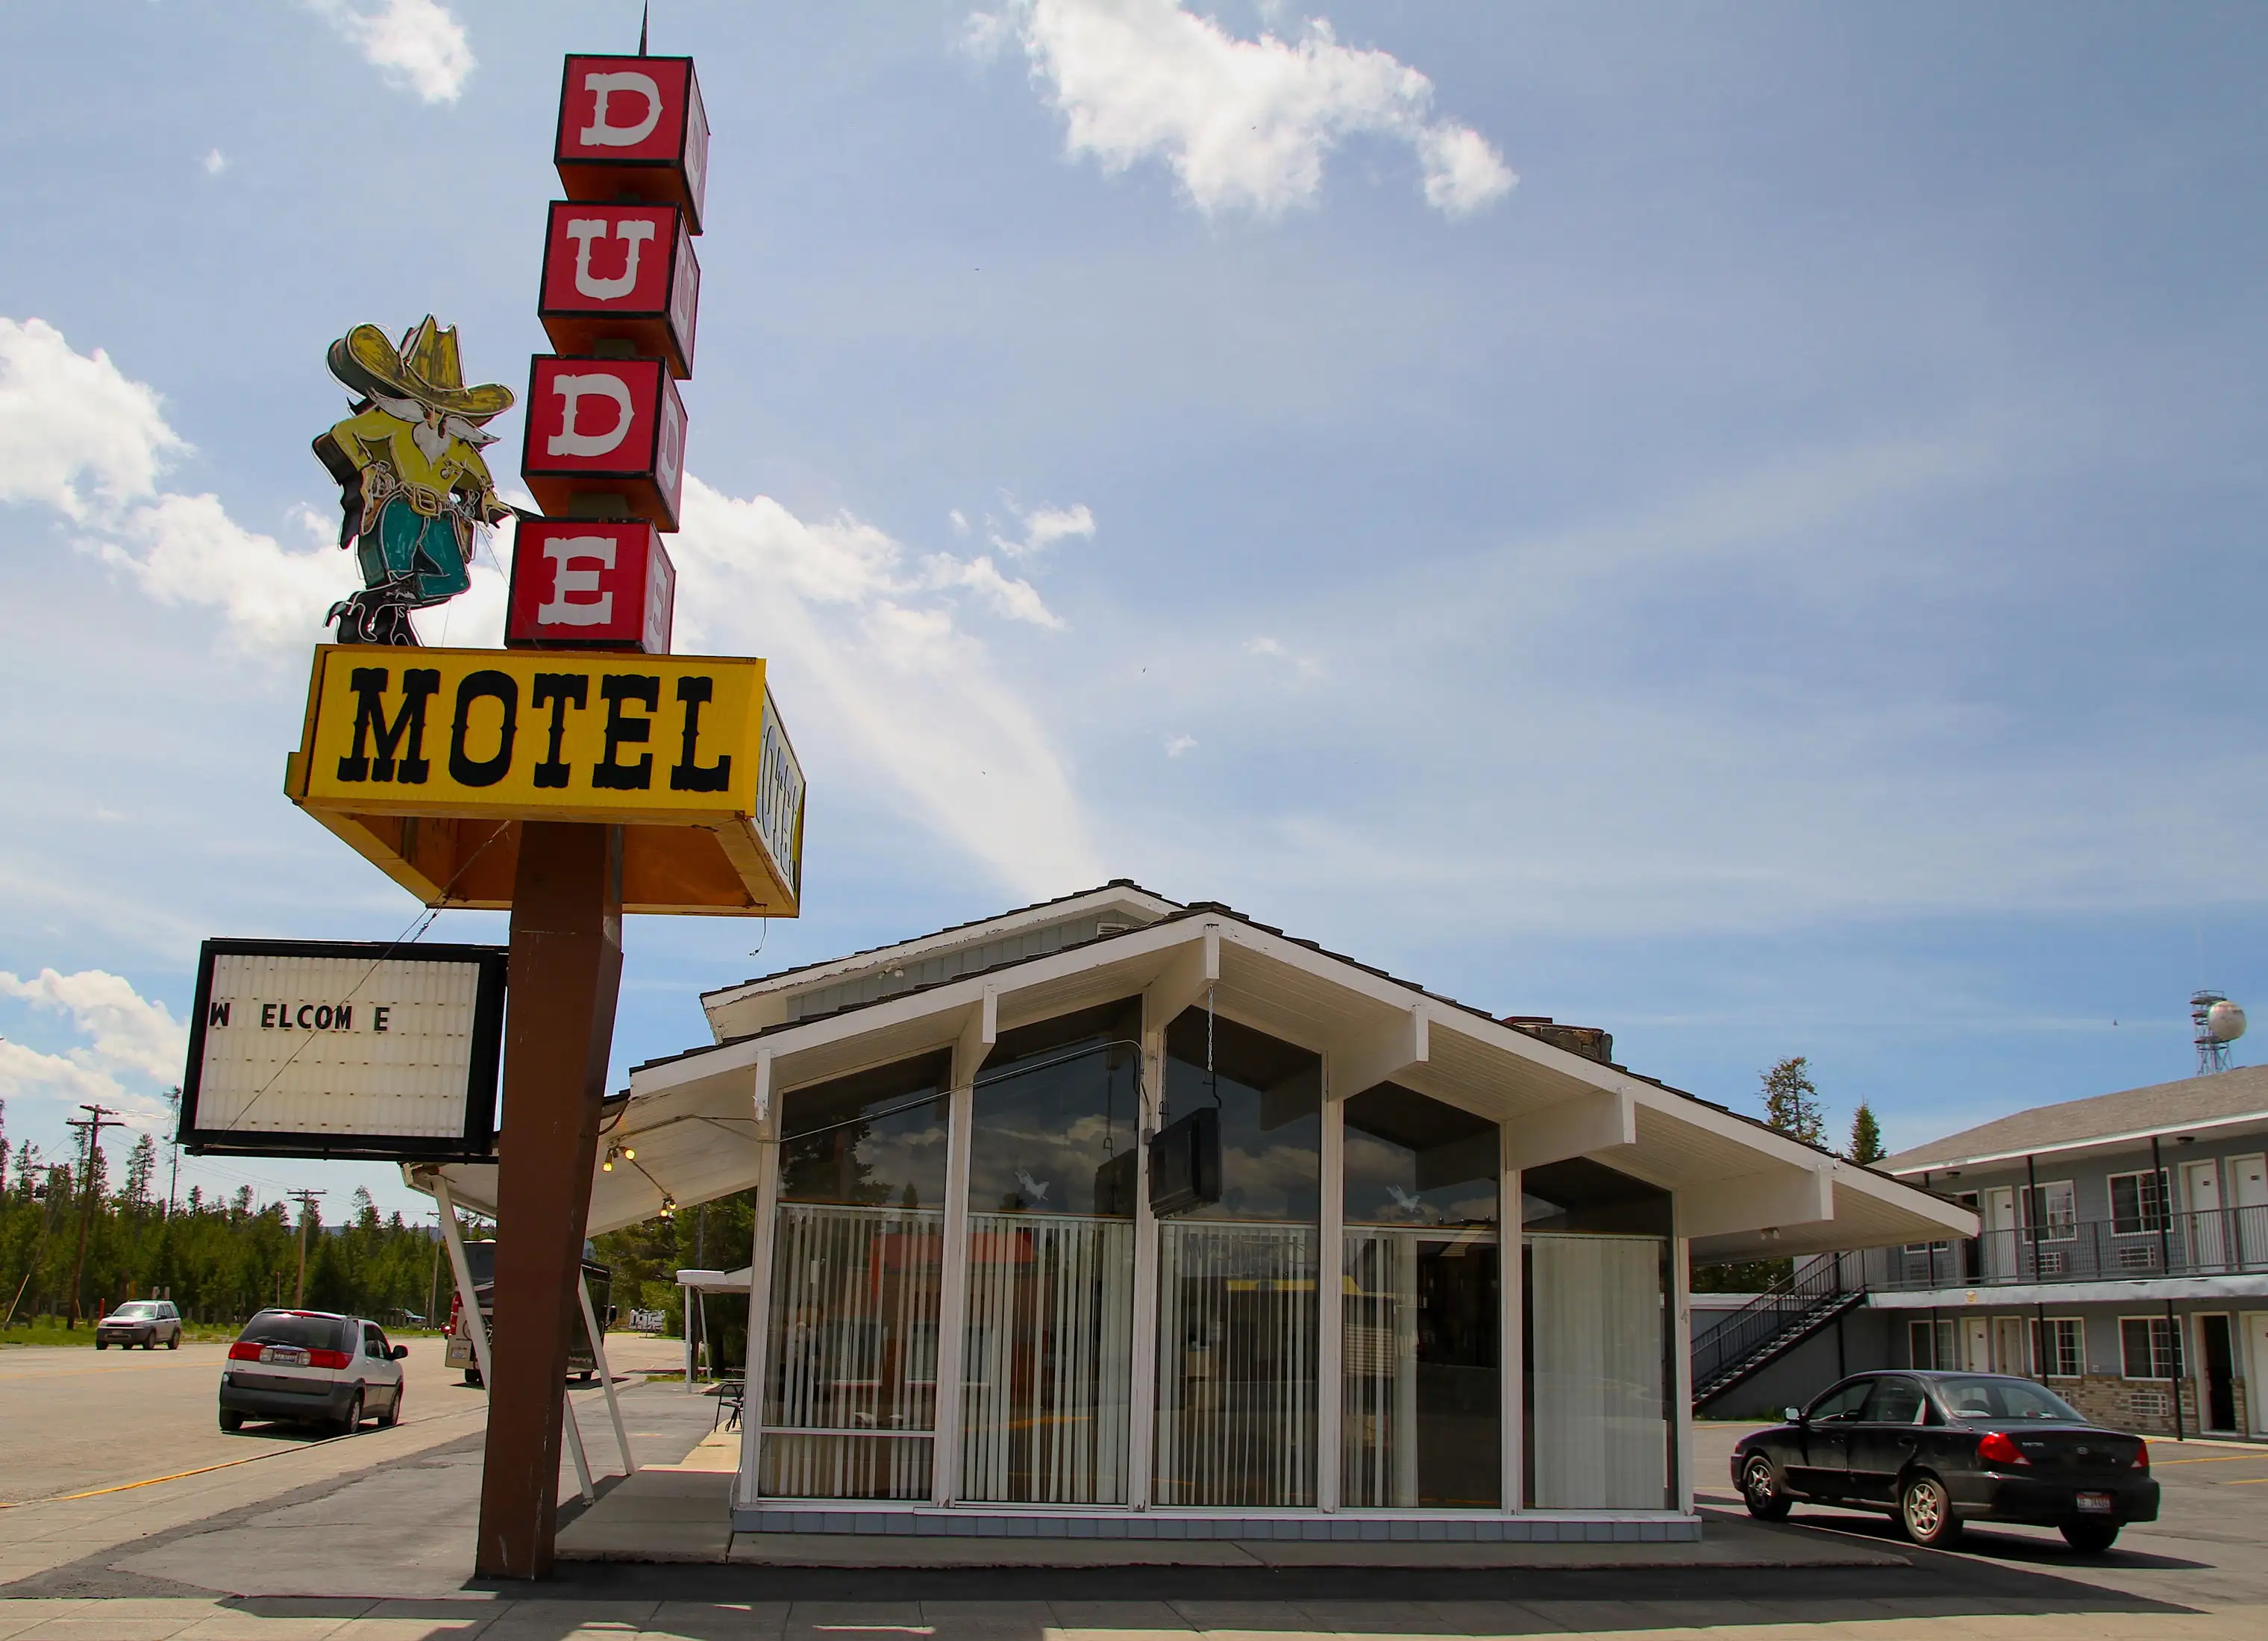 The Dude Motel